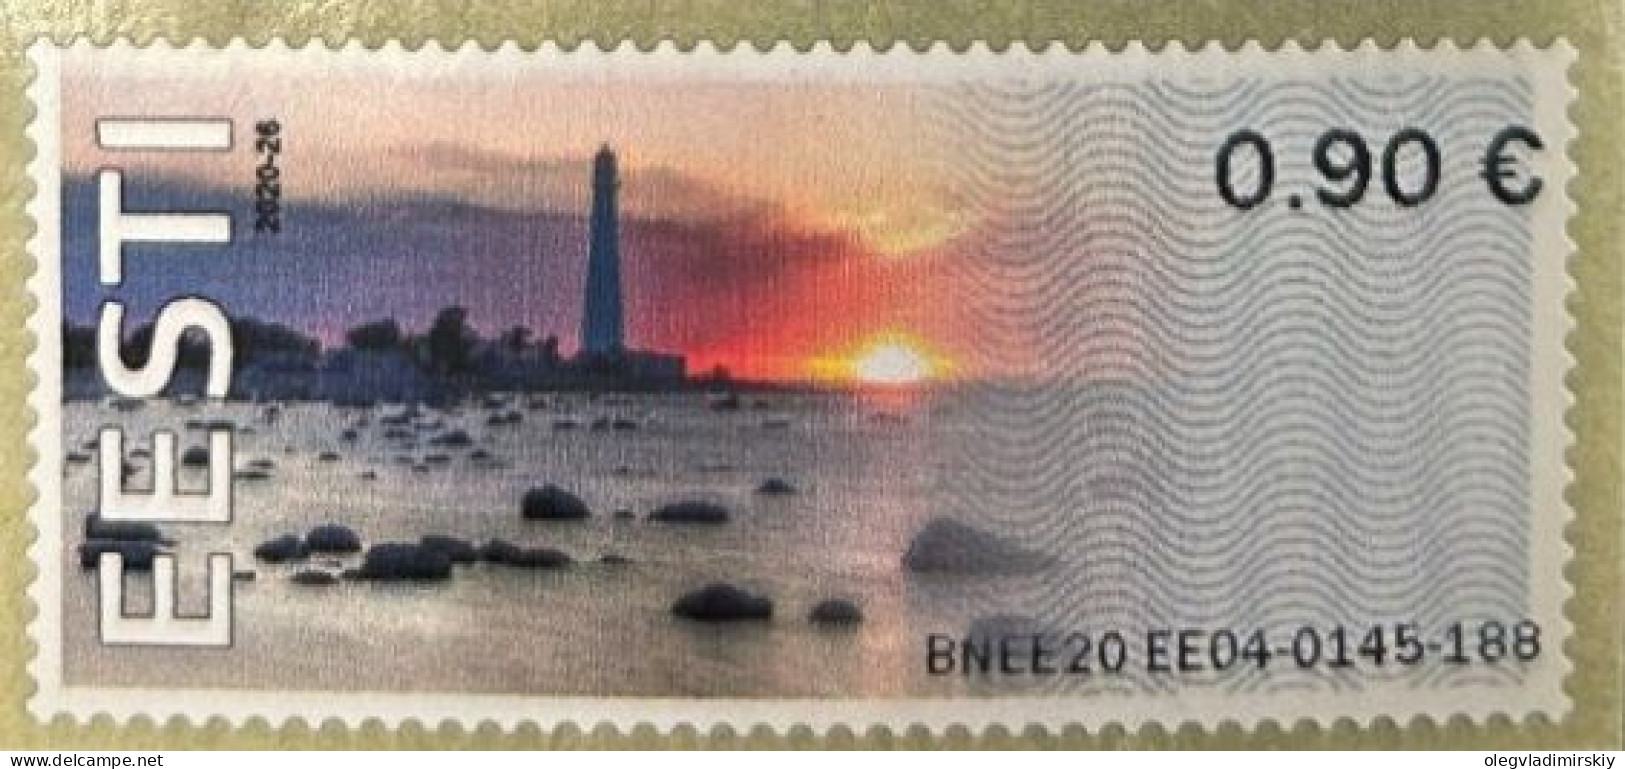 Estonia Estland Estonie 2020 Tahkuna Lighthouse Stamp MNH - Leuchttürme